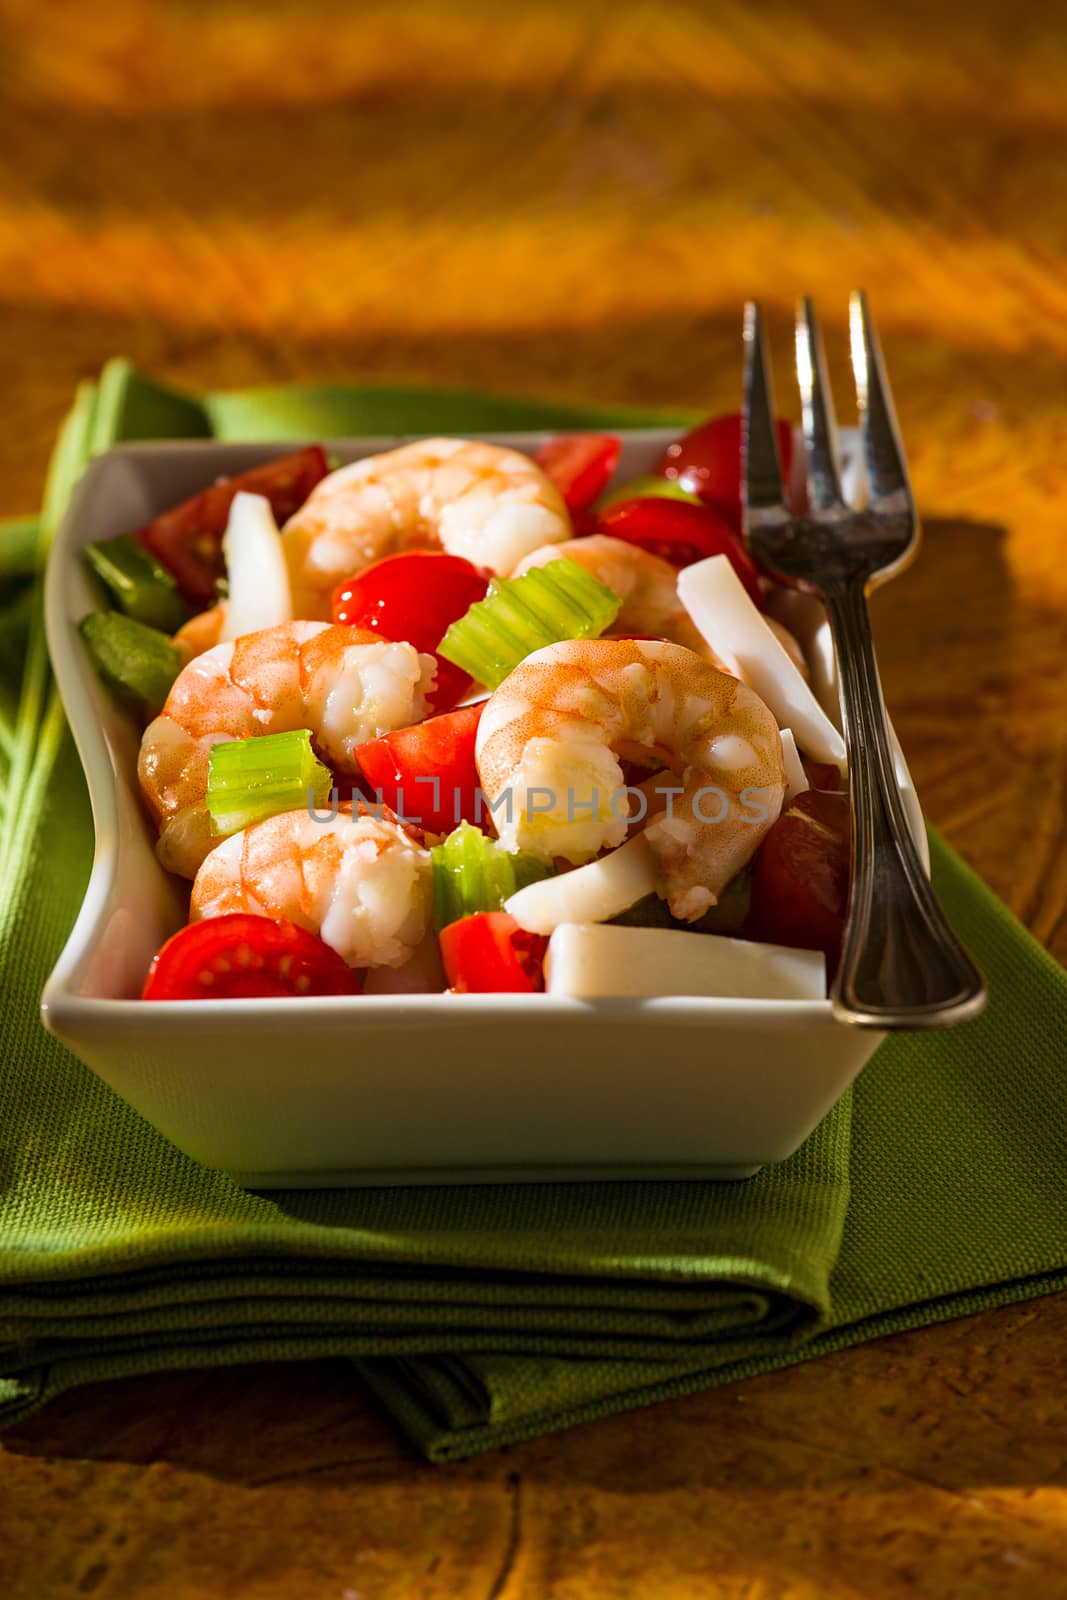 Shrimp salad over a green napkin by LuigiMorbidelli